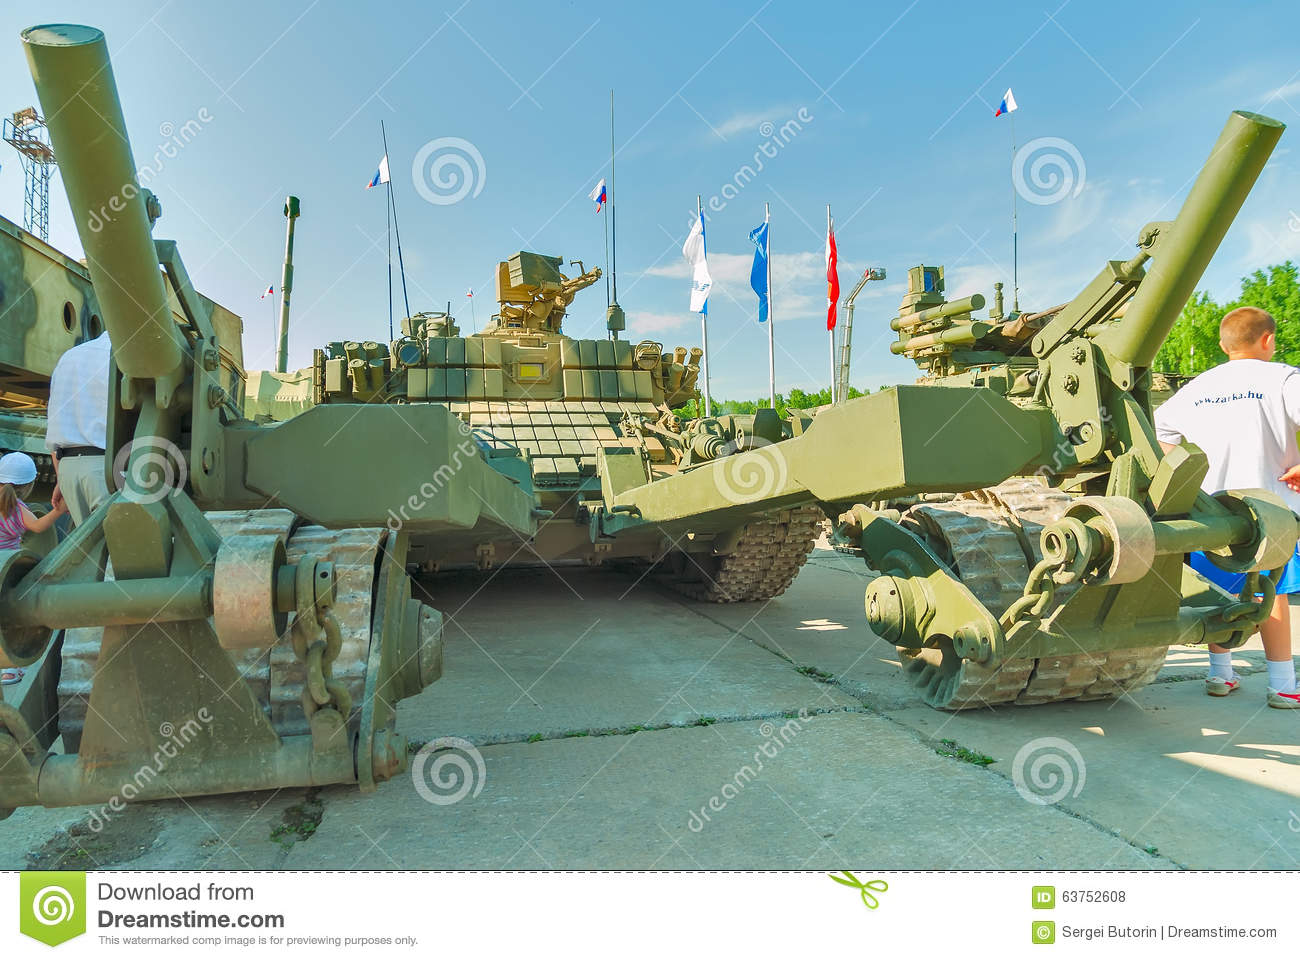 armored-mine-clearing-vehicle-bmr-m-russia-nizhniy-tagil-july-visitors-examine-m.jpg